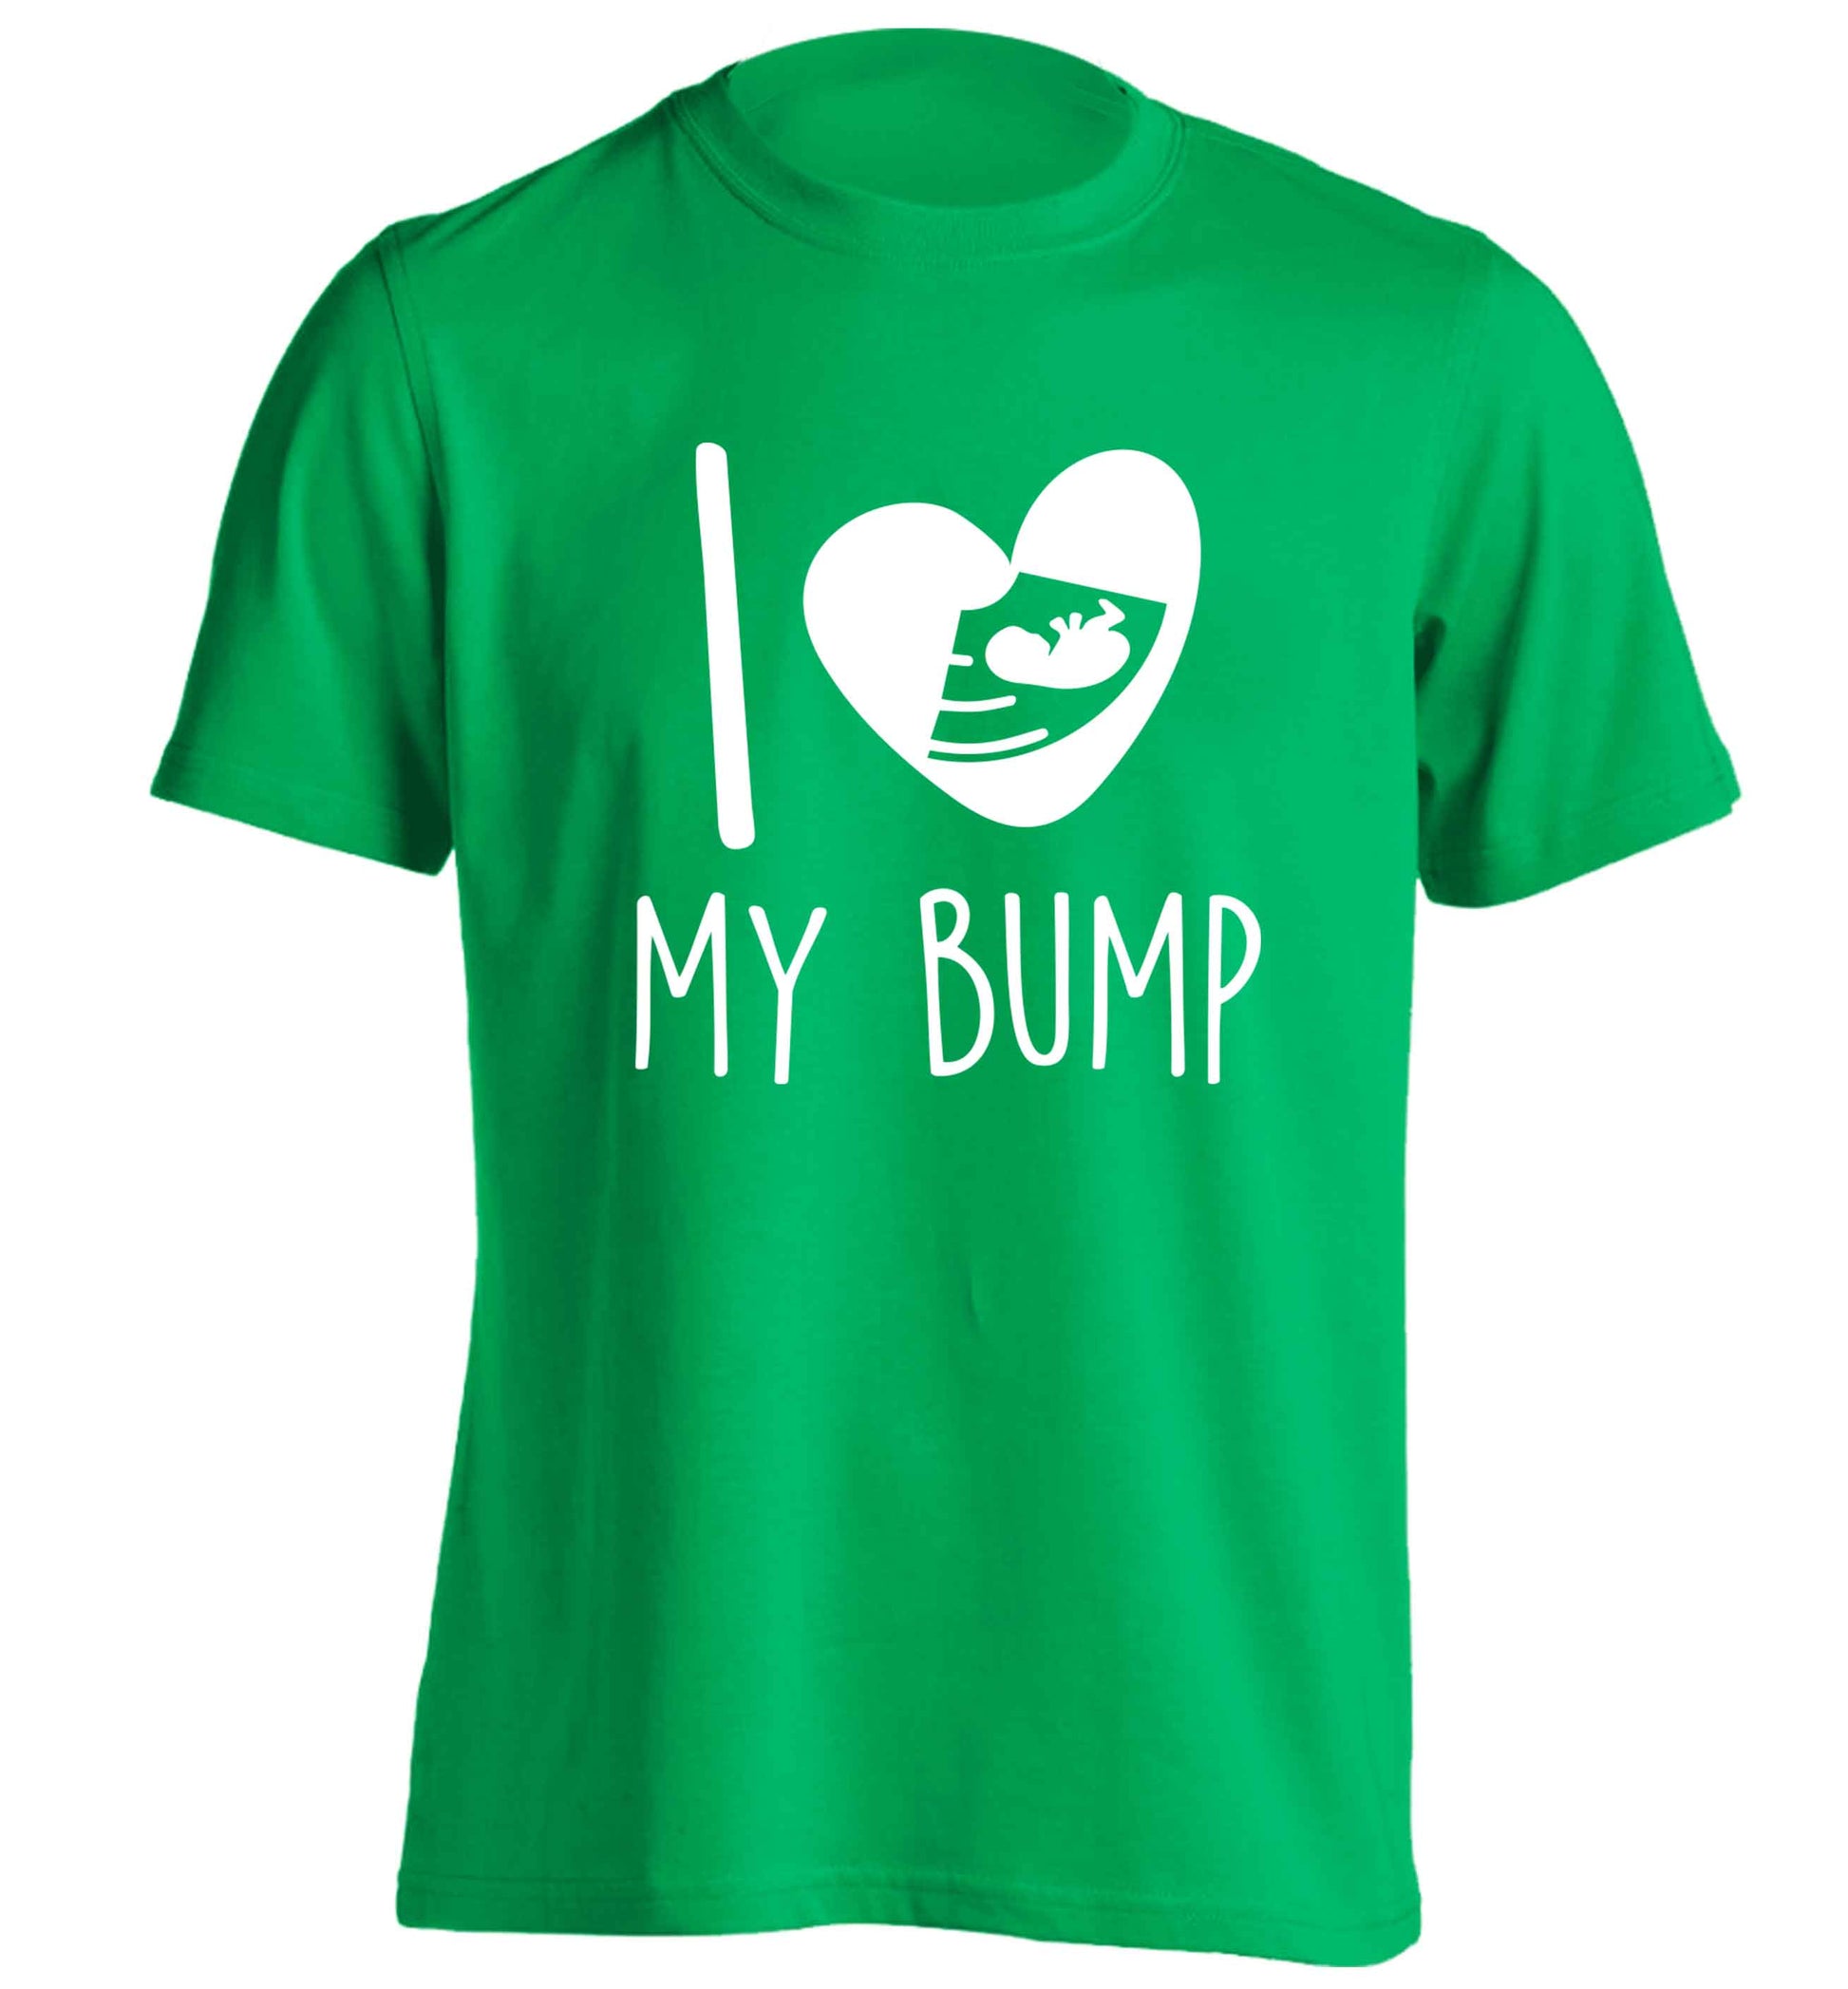 I love my bump adults unisex green Tshirt 2XL